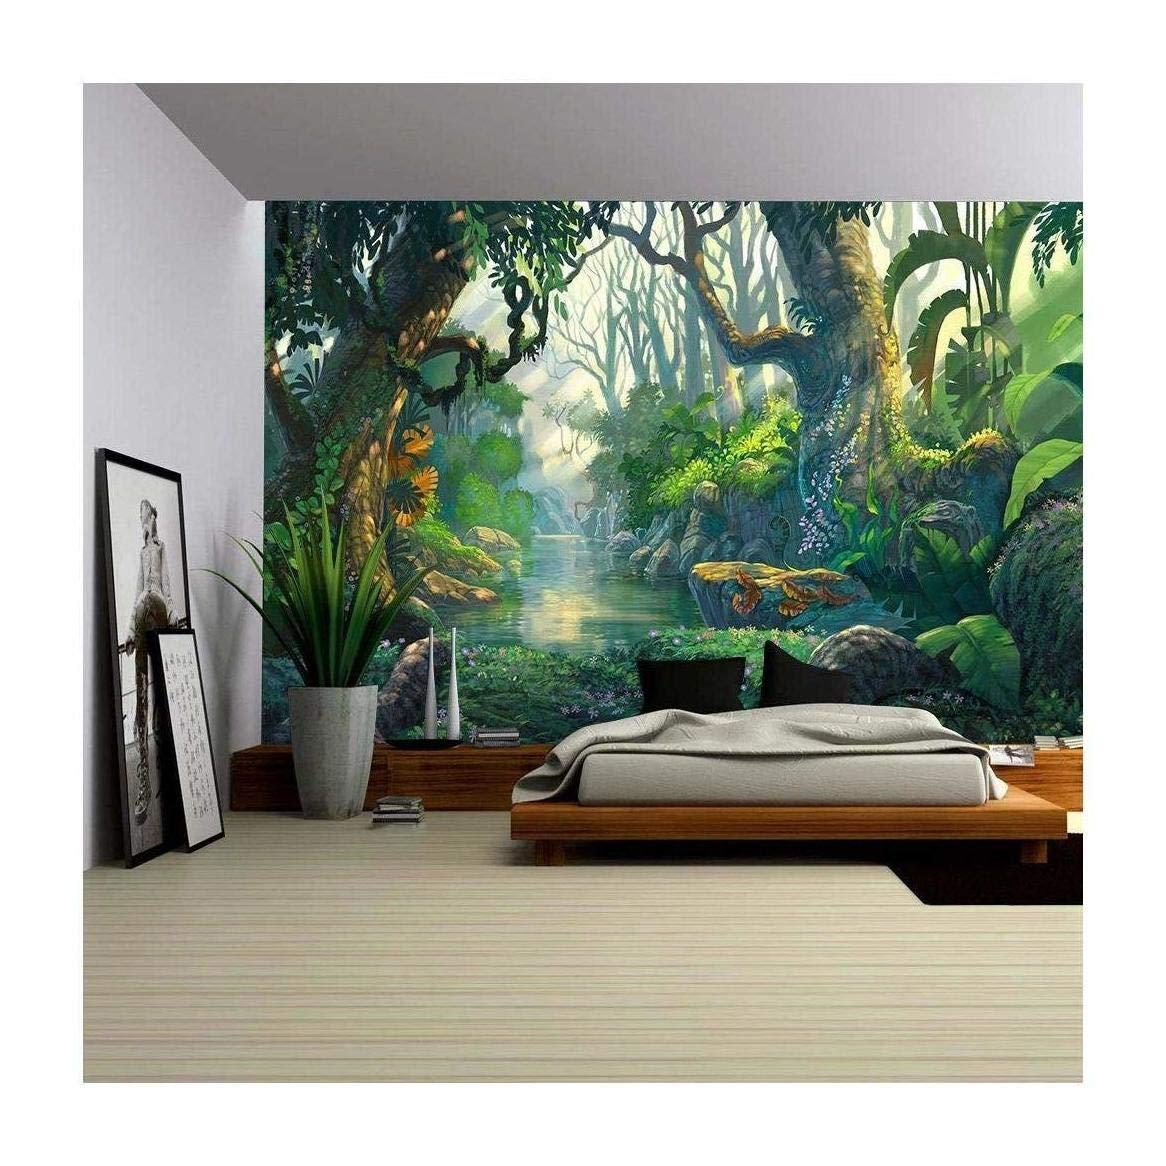 1166 x 1166 · jpeg - Wall26 Illustration - Fantasy Forest Background Illustration Painting ...